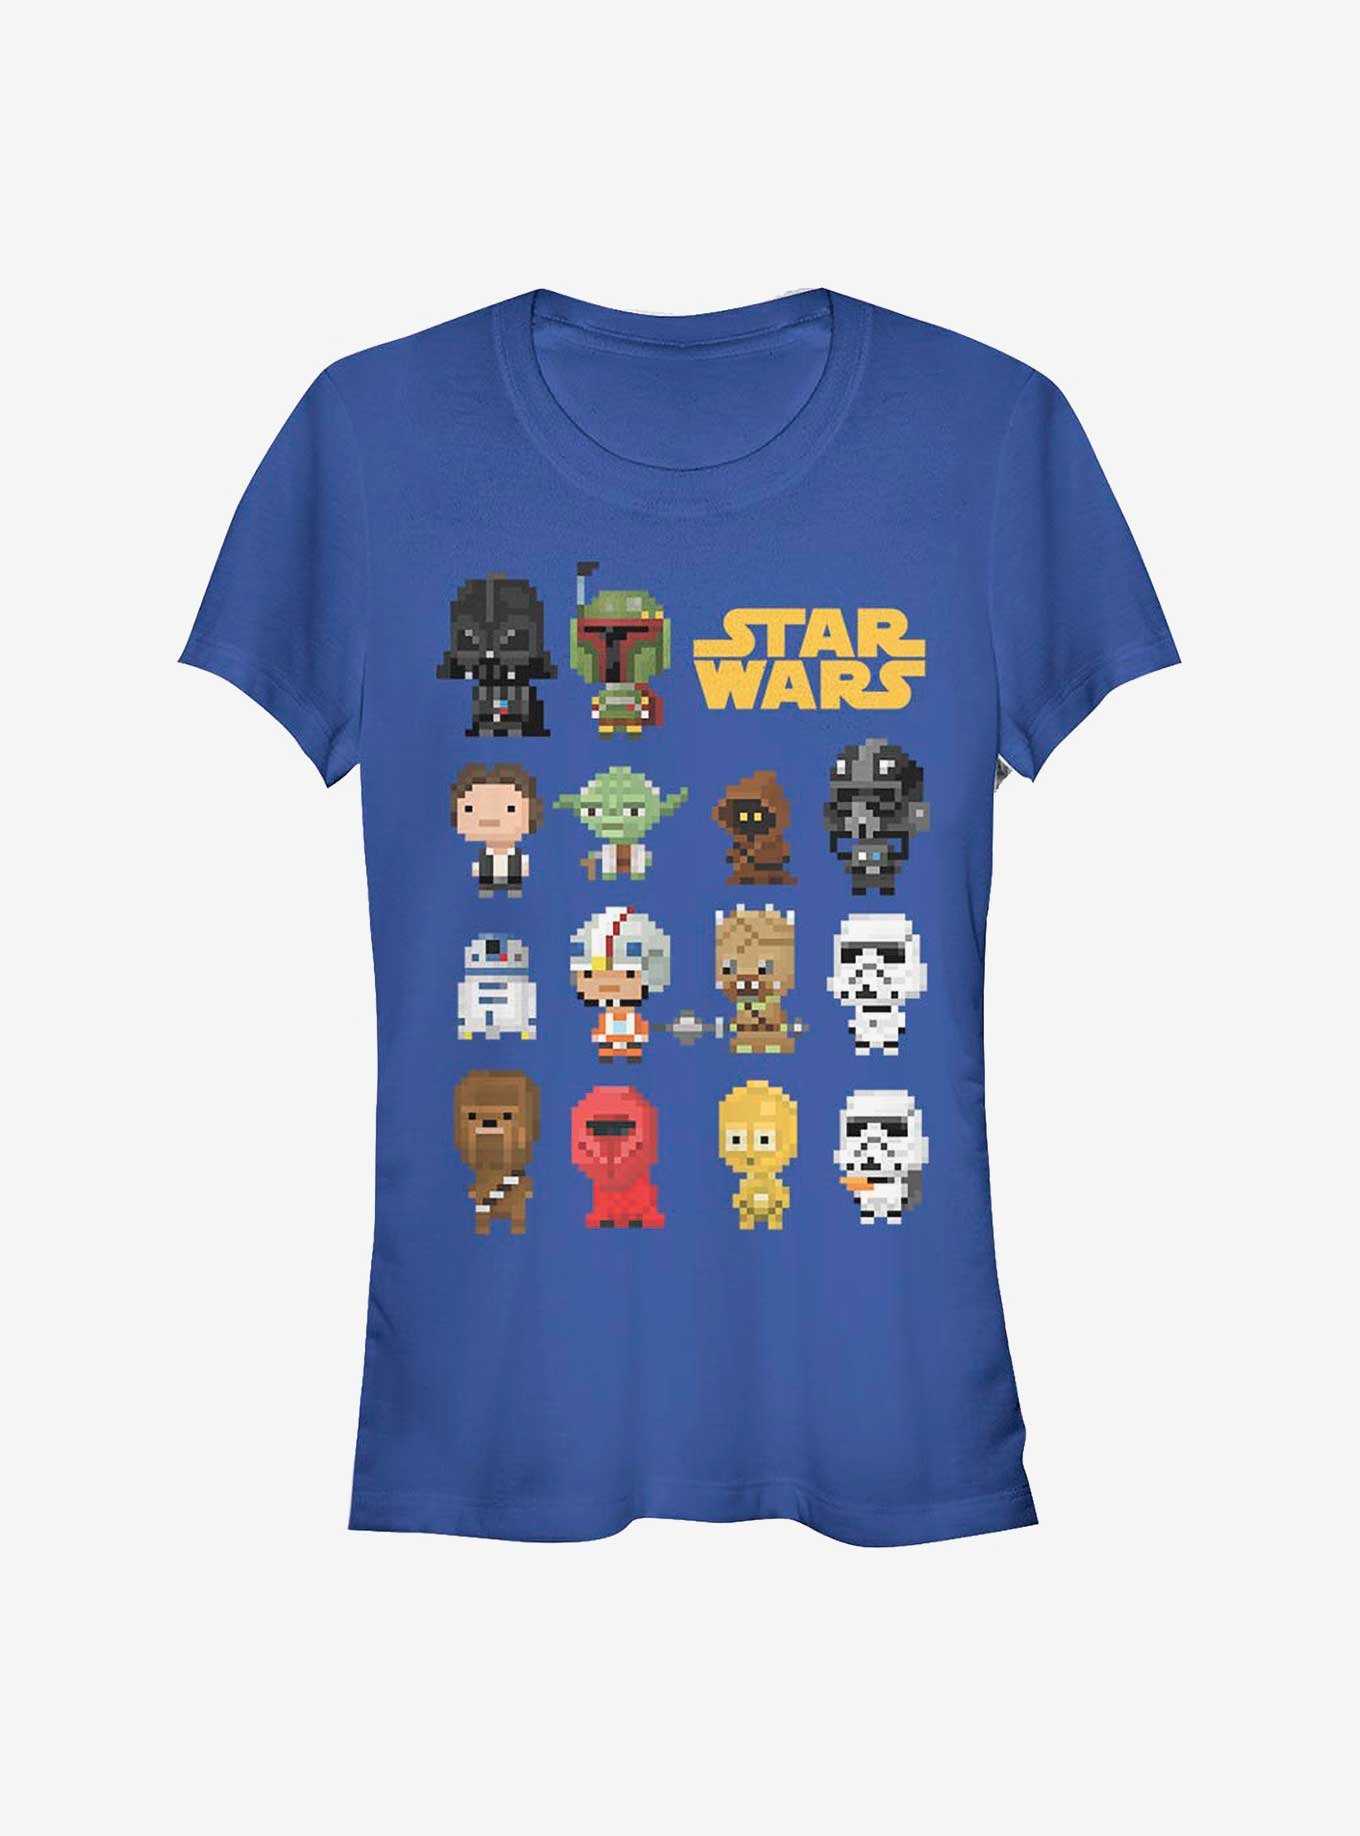 Star Wars Pixel Party Girl's T-Shirt, , hi-res